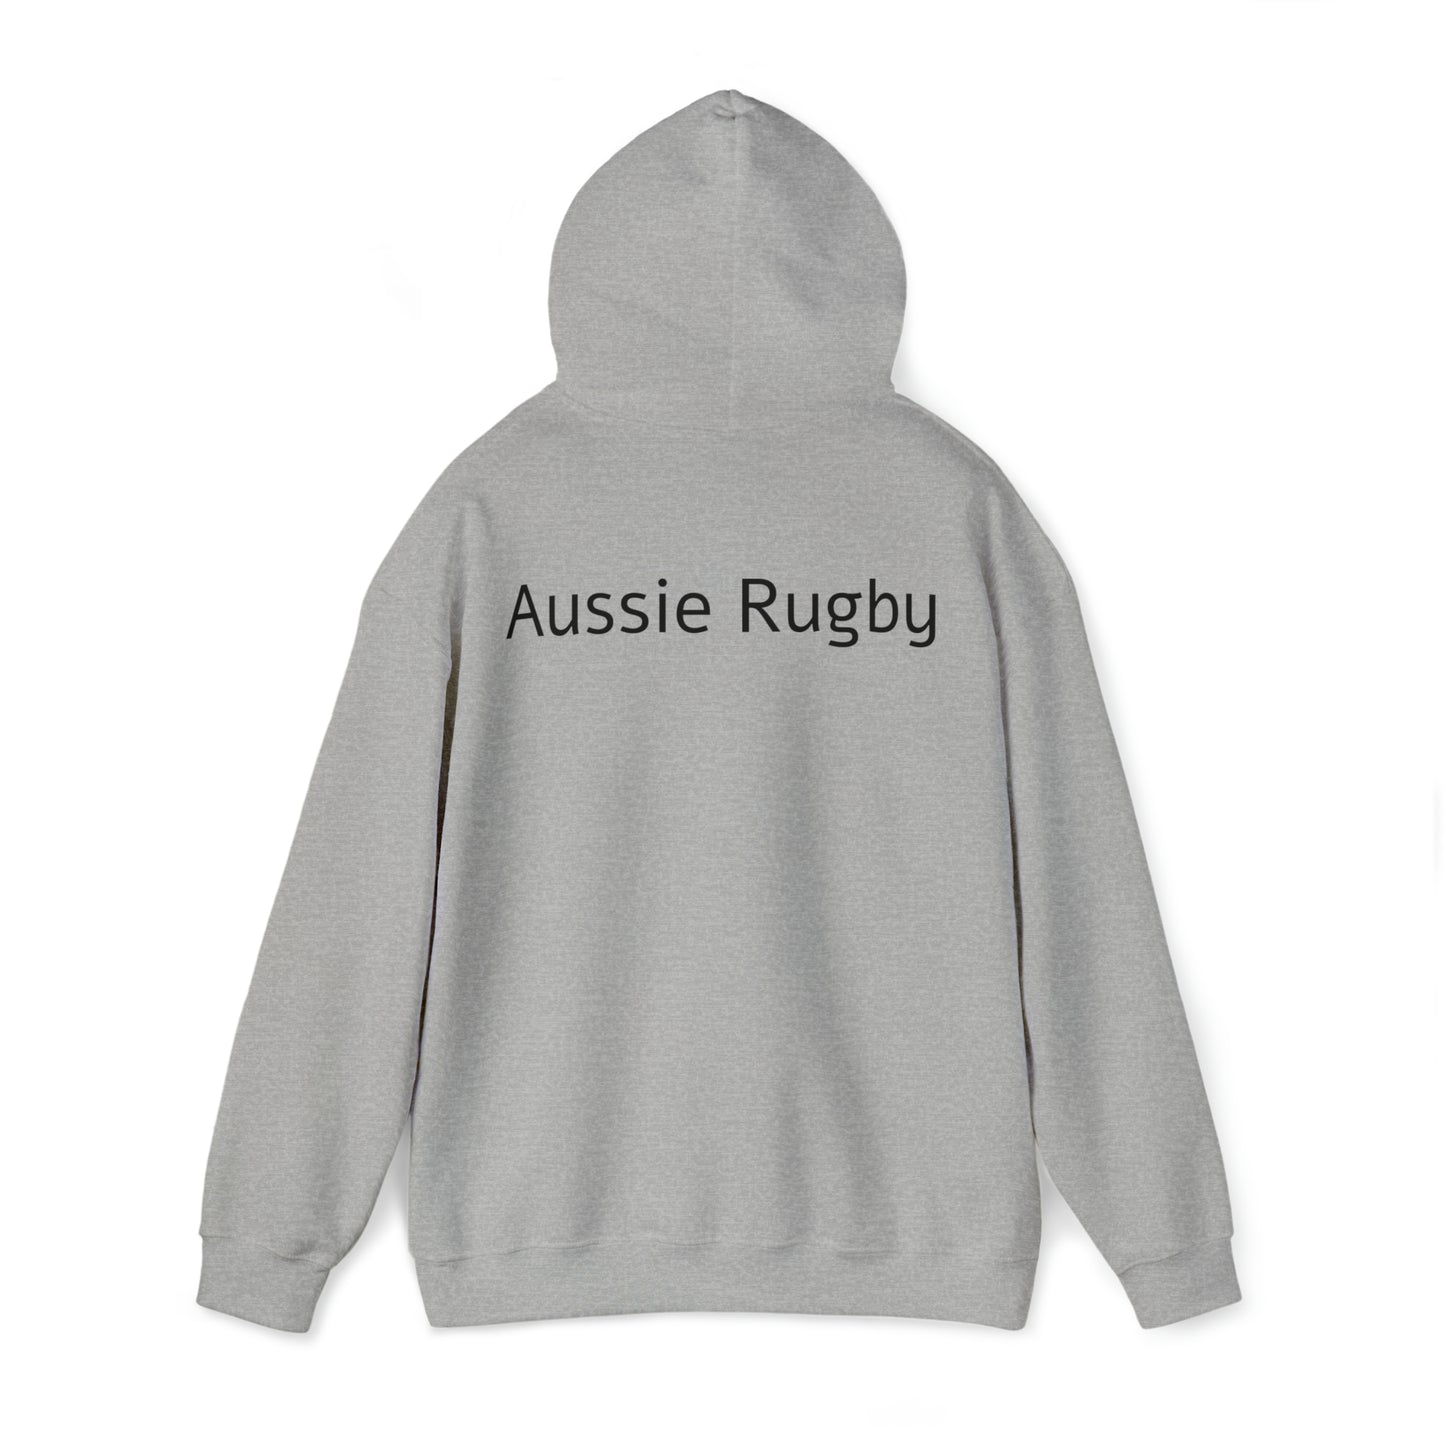 Australia lifting RWC - light hoodies